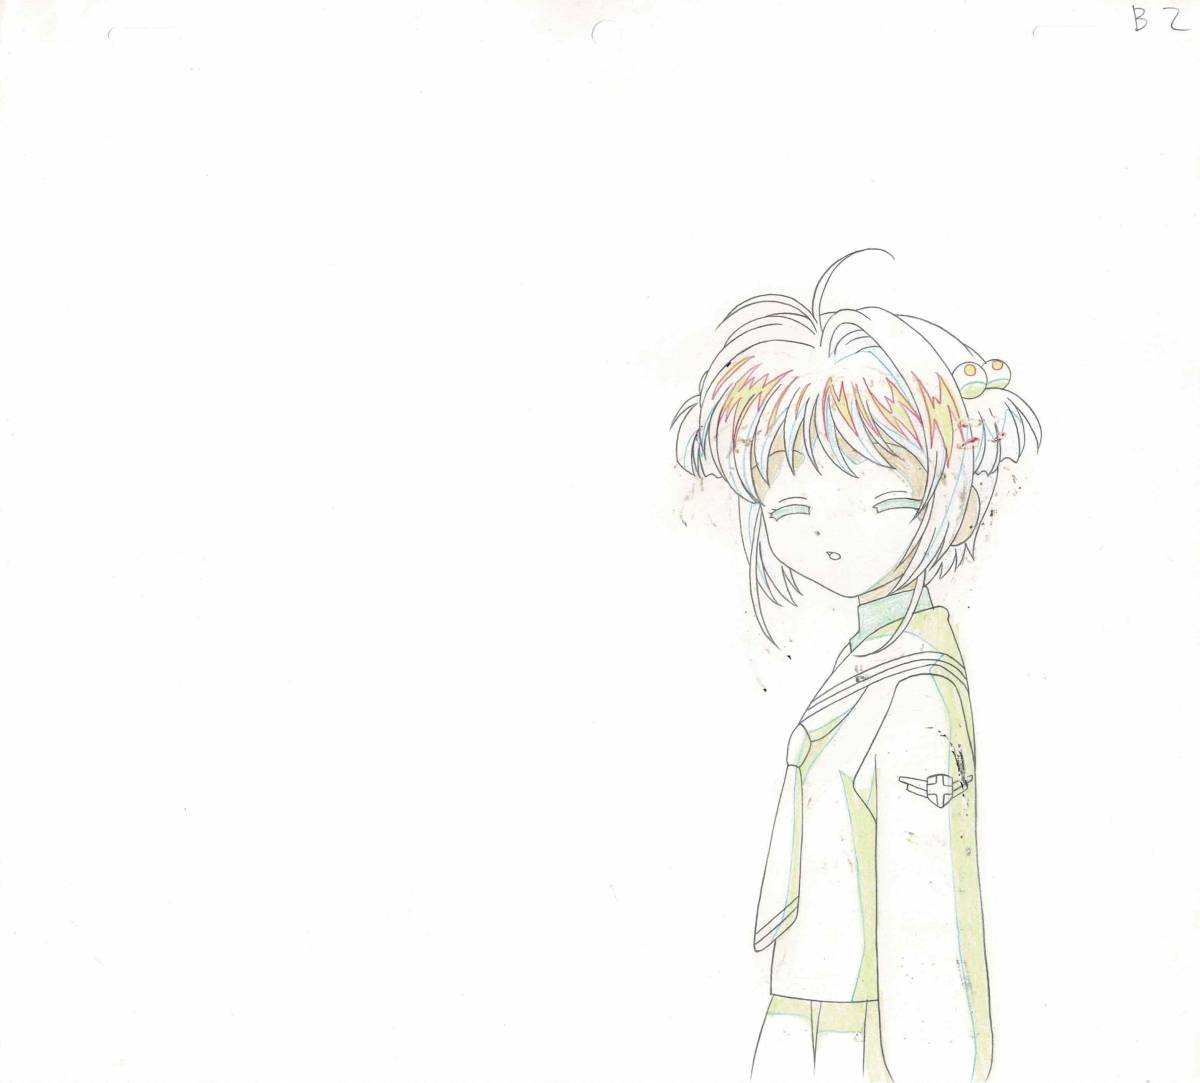  Cardcaptor Sakura дерево .книга@ Sakura цифровая картинка анимация исходная картина CLAMP.. фирма Nakayoshi KC Deluxe грязь house [A608]